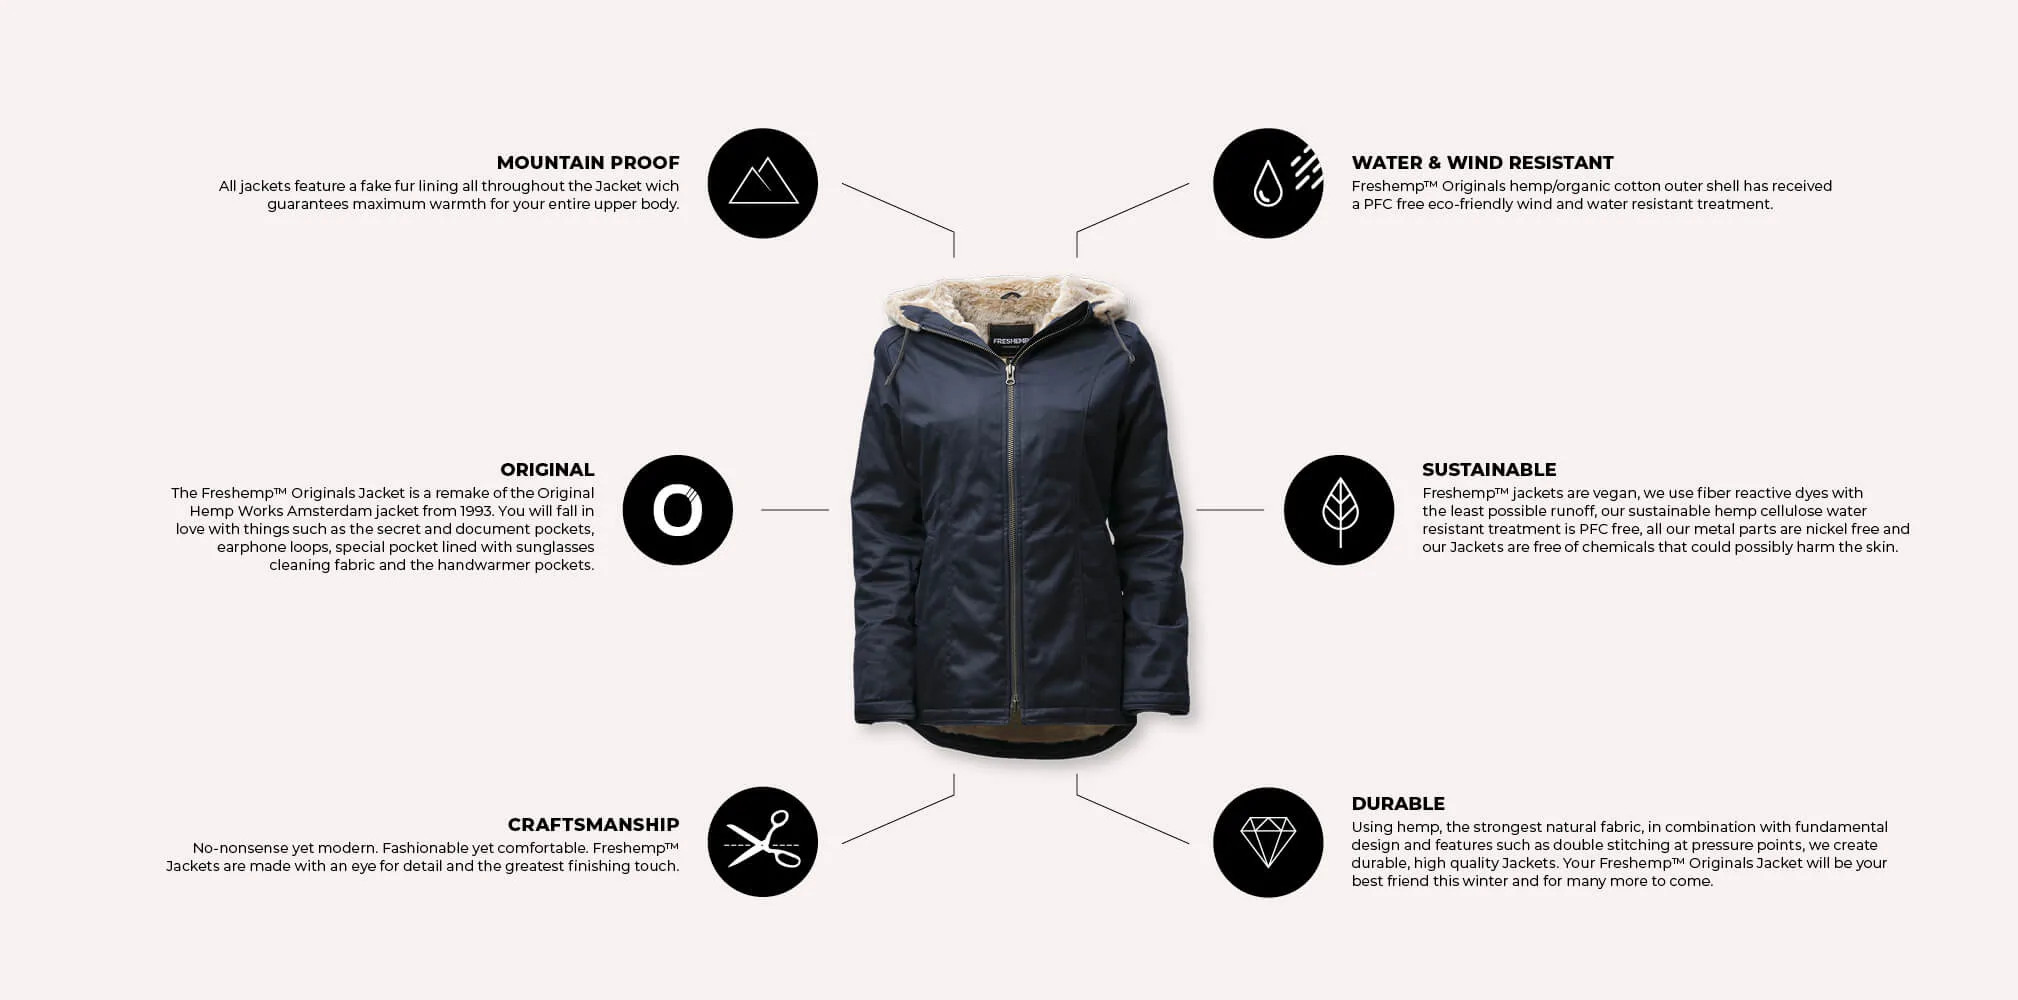 freshemp-sustainable-hemp-jacket-benefits-woman.jpg